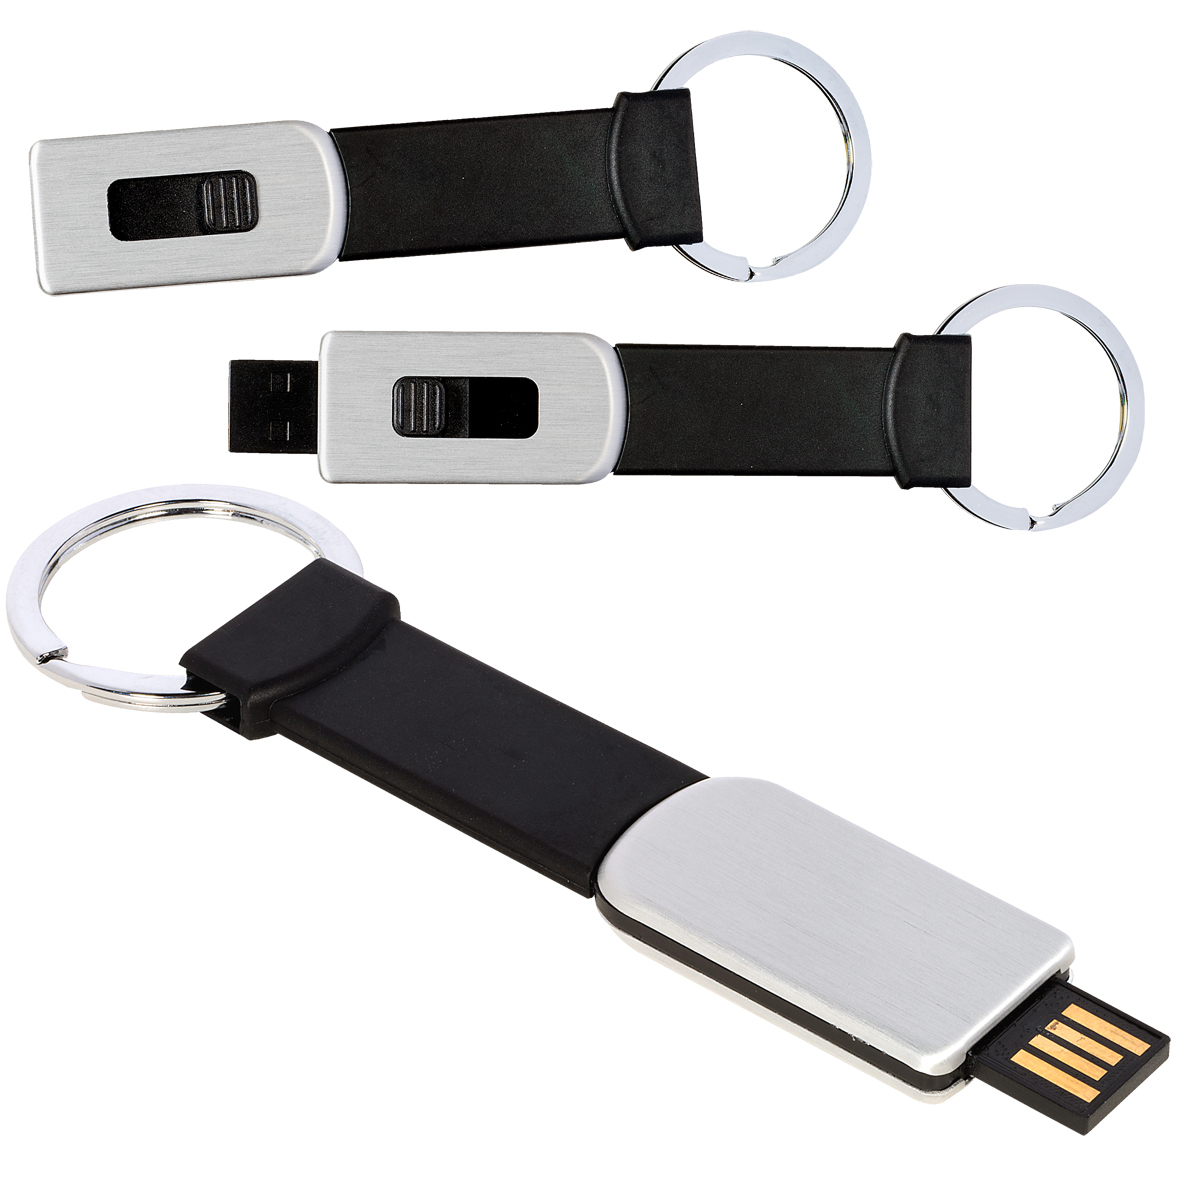 Key Chain USB Memory Flash Drive - 8GB